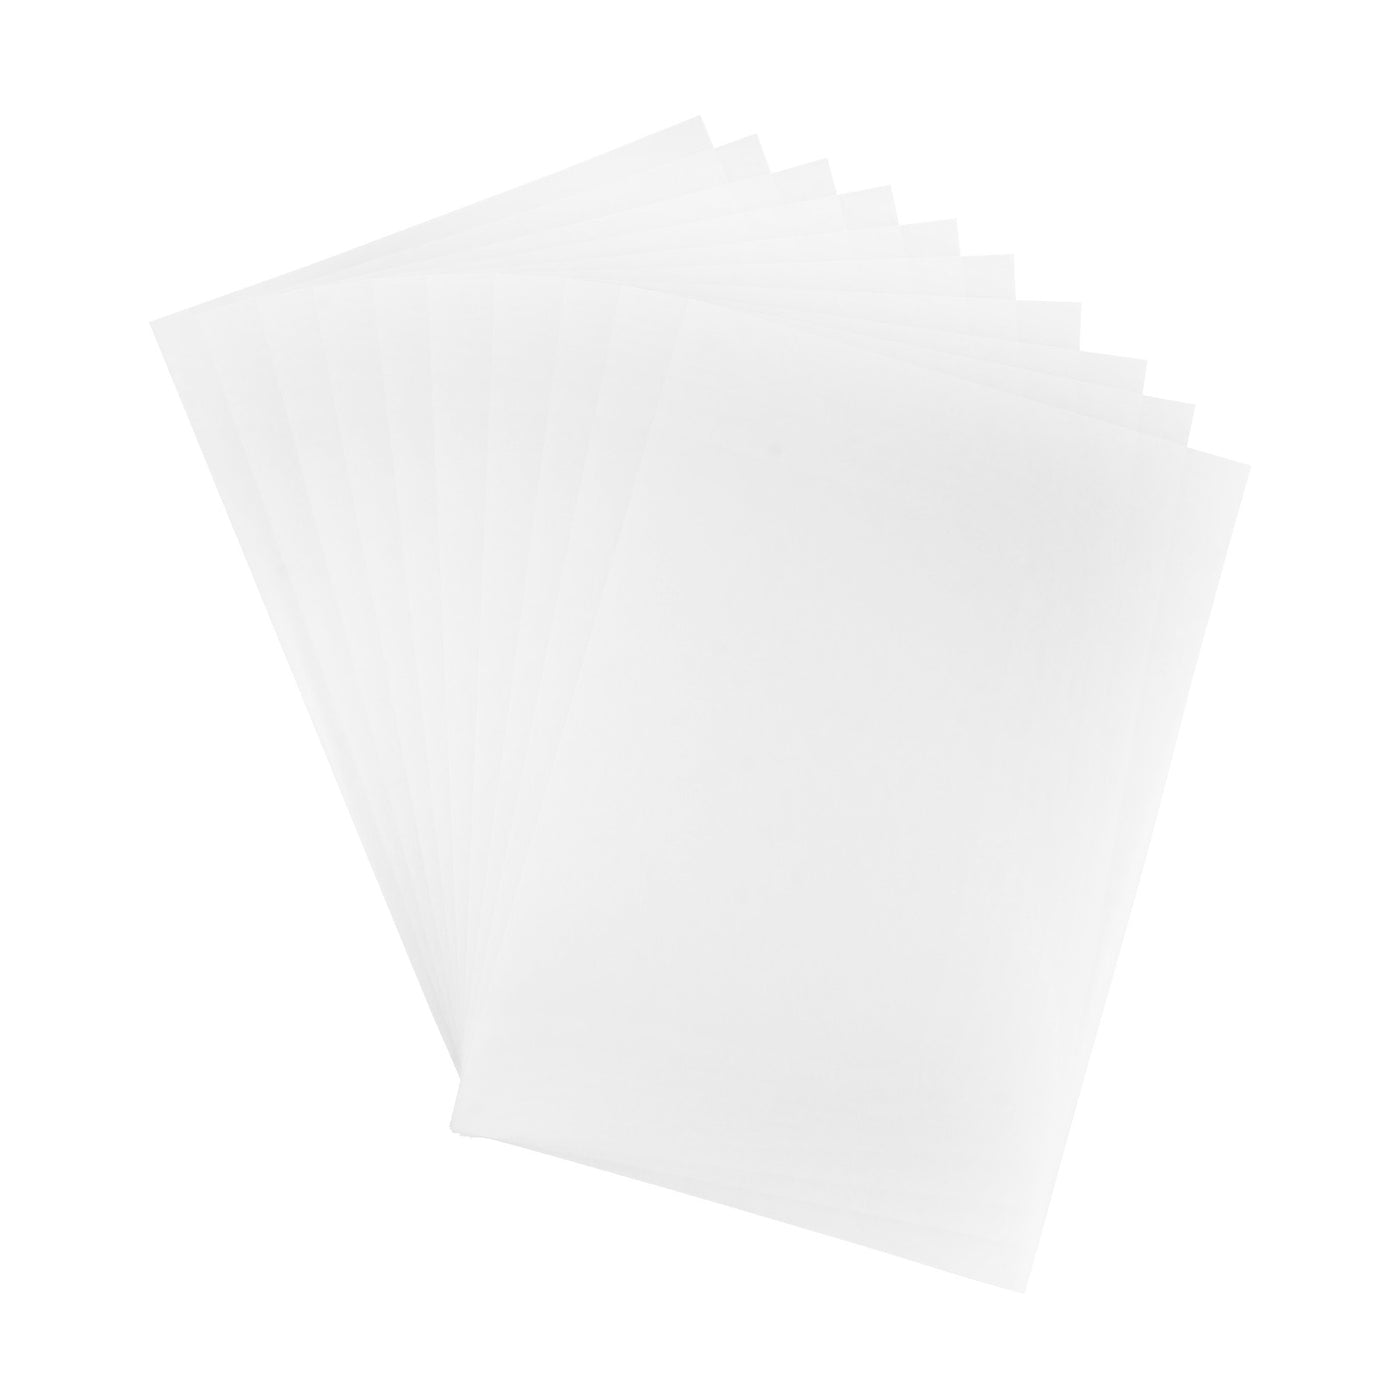 Harfington Shrink Plastic Sheet,Small Sanded Shrink Films Paper for Creative Craft 10 Pack